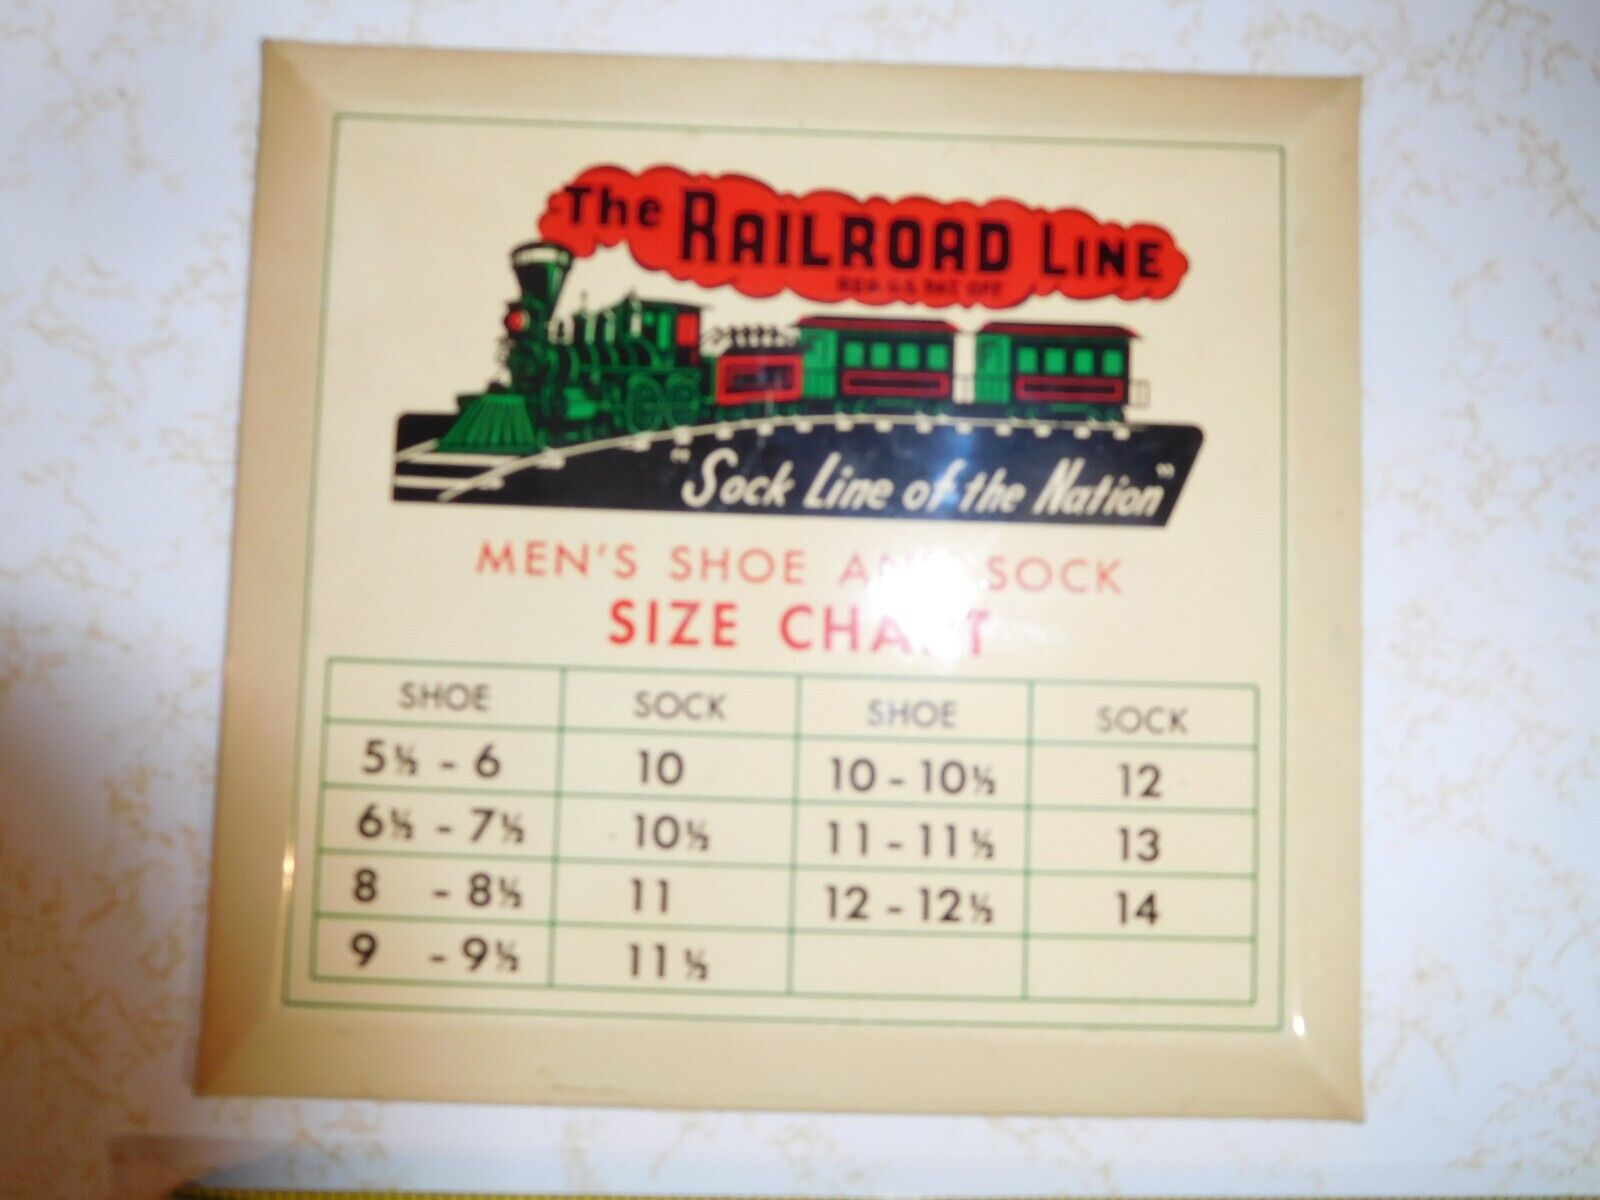 Rare Vintage Tin Litho Sign Railroad Line Sock Line of the Nation Men\'s Shoe